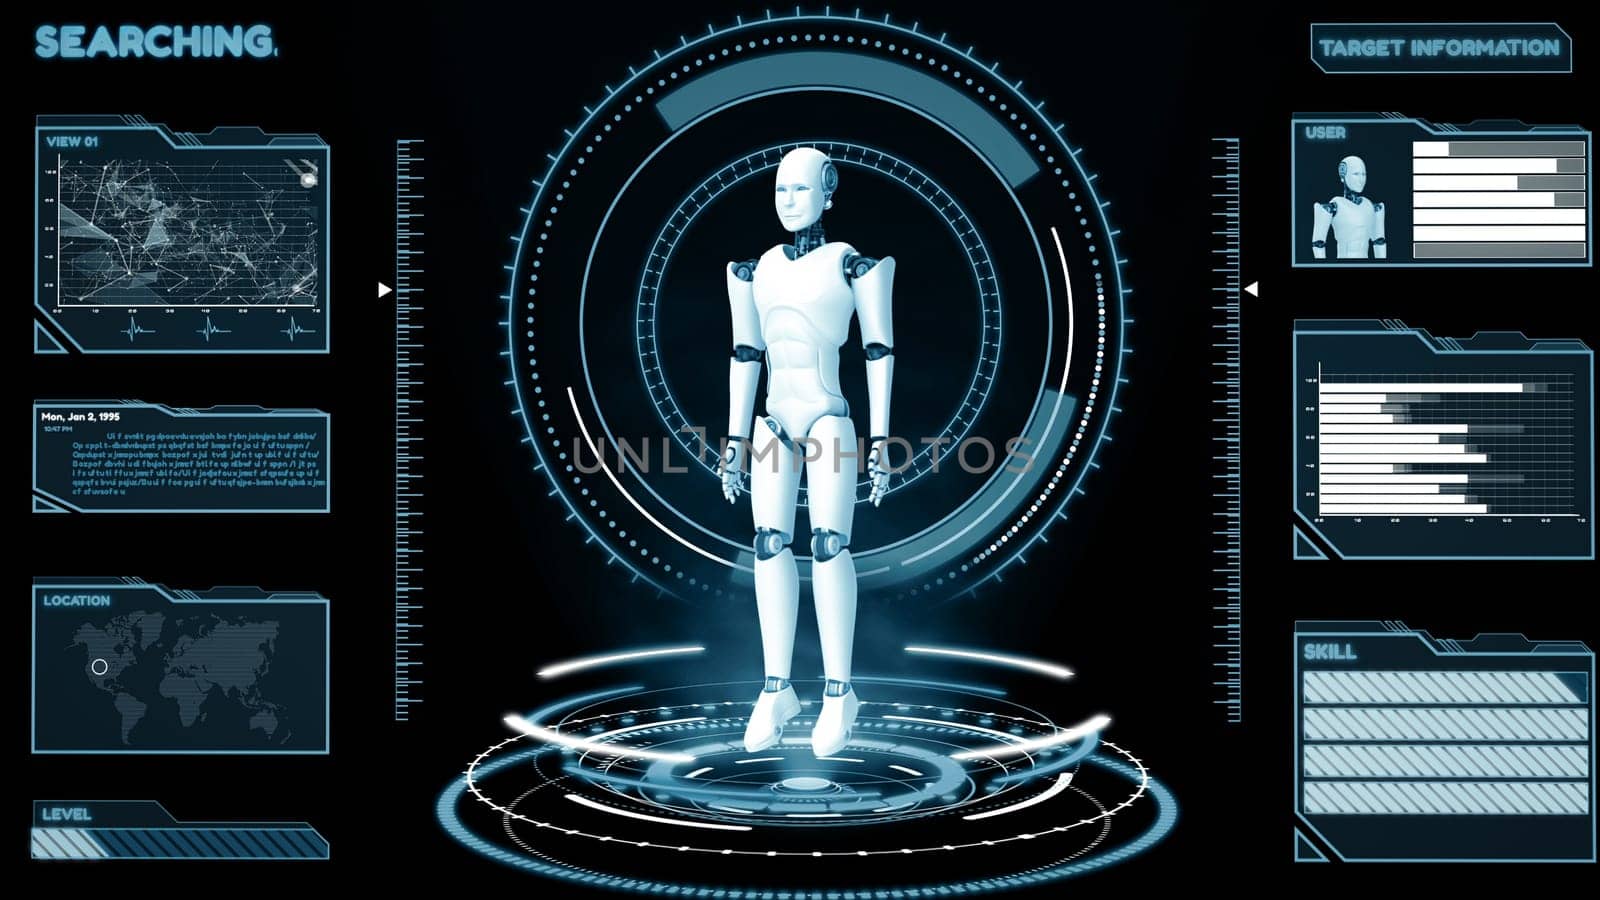 XAI 3d illustration Futuristic robot, artificial intelligence CGI big data analytics and programming. Robotic man 3D render animation. 3D illustration.